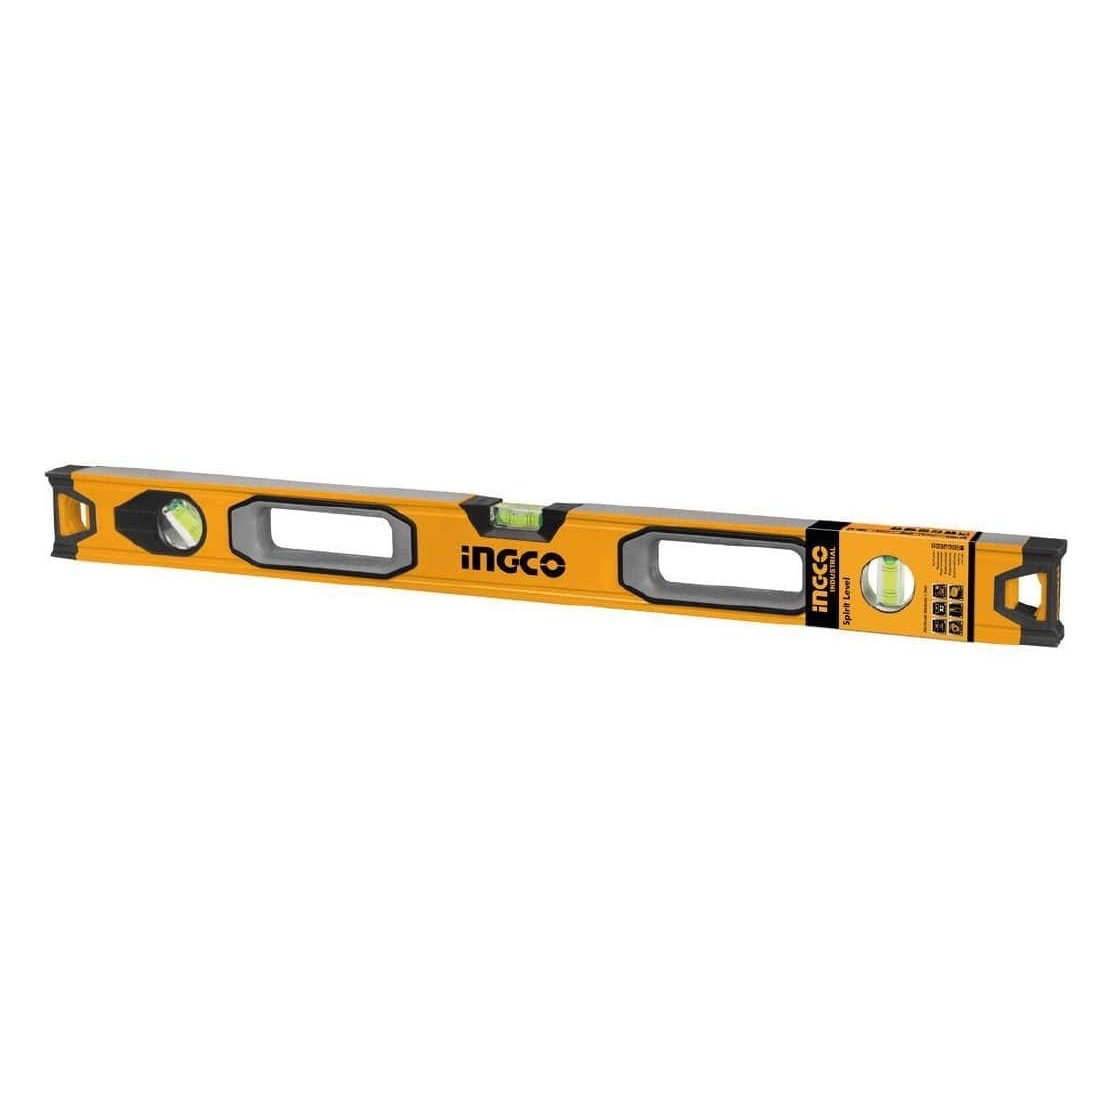 Ingco Spirit Level 150cm - HSL08150 | Supply Master | Accra, Ghana Level Buy Tools hardware Building materials